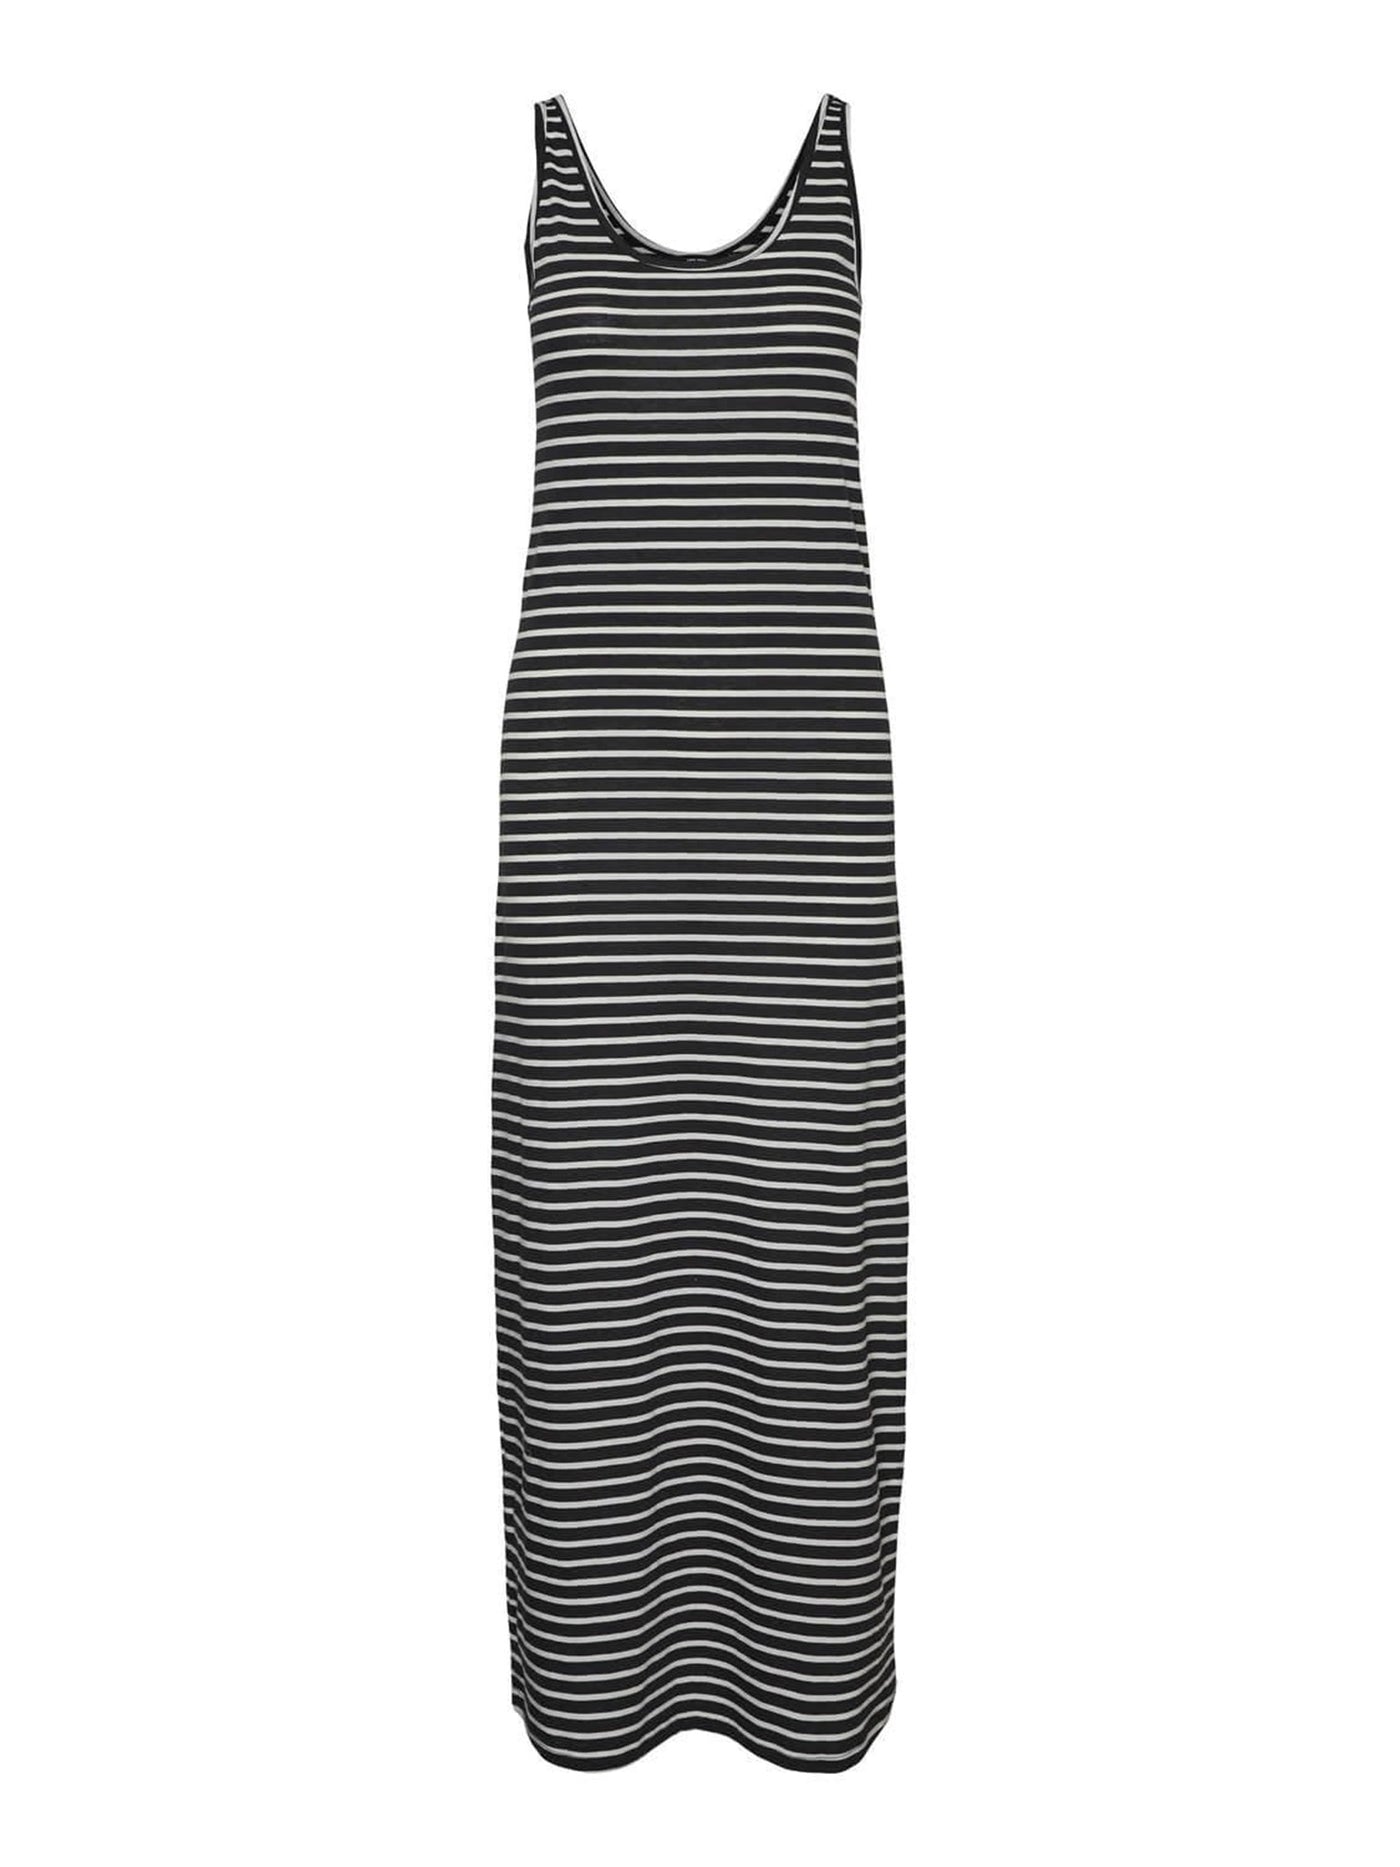 Maria Dress - Black / White Striped - Vero Moda - Black